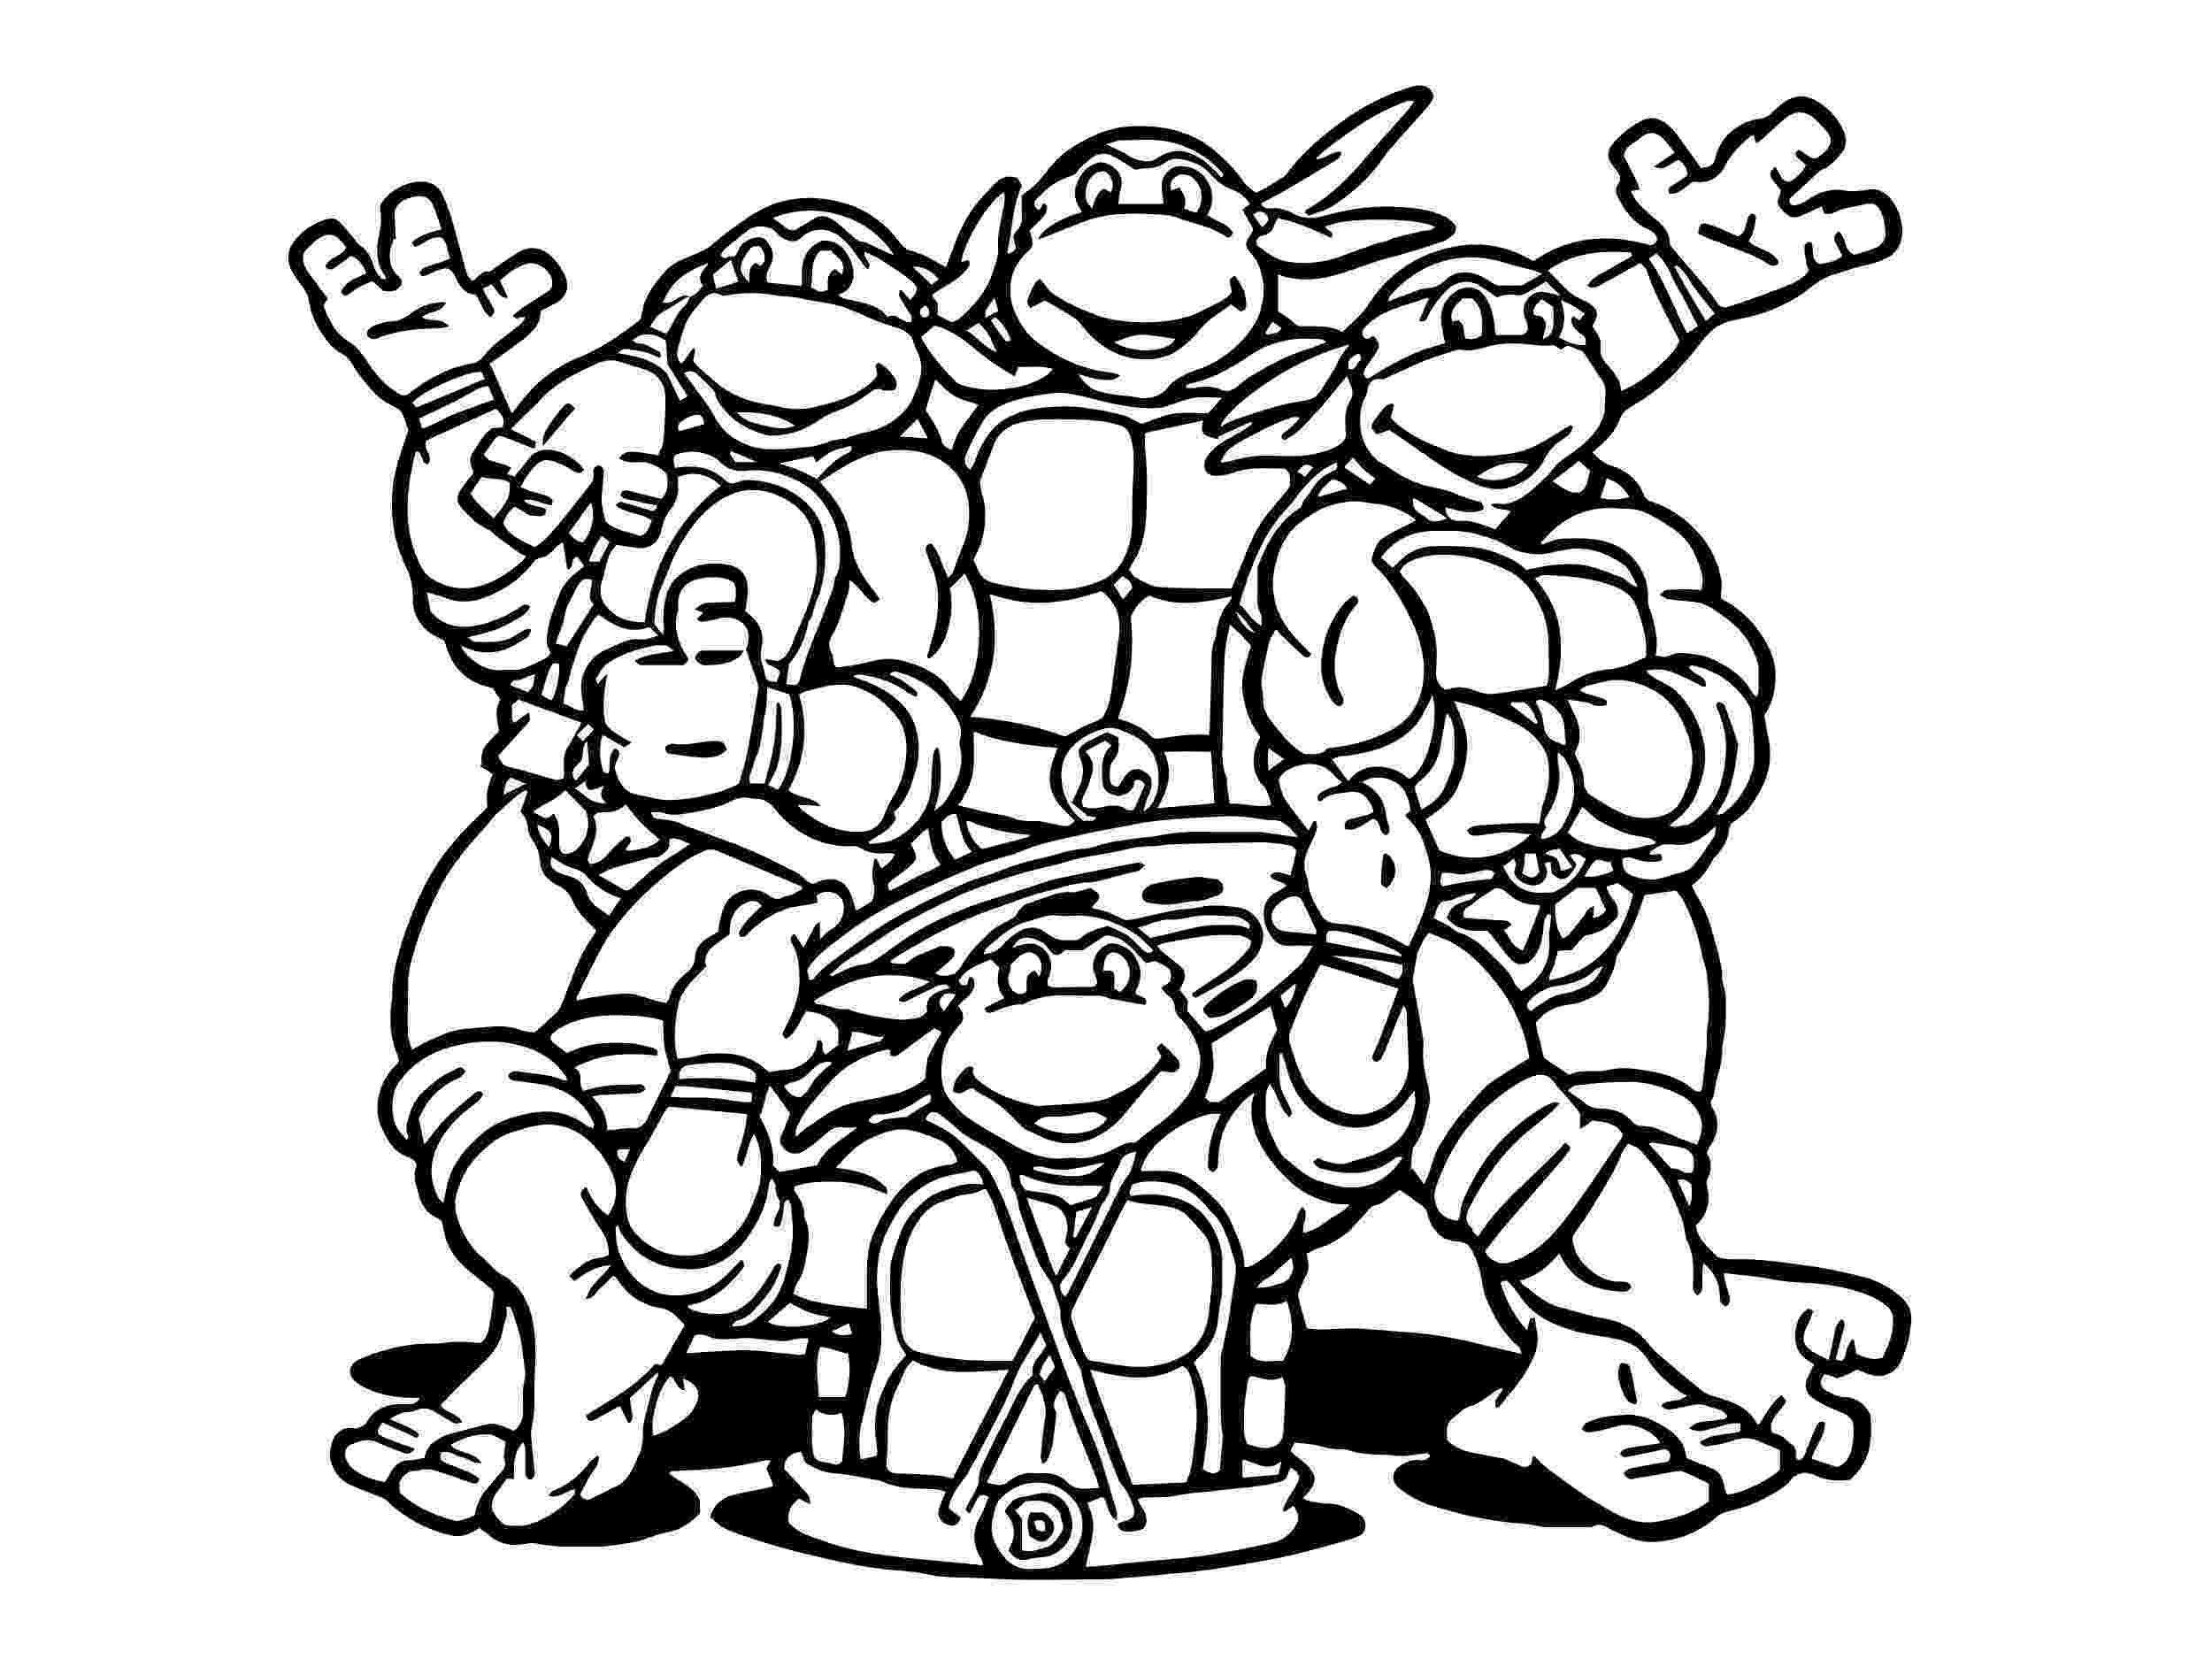 teenage mutant ninja turtles coloring sheet print download the attractive ninja coloring pages for coloring turtles teenage sheet ninja mutant 